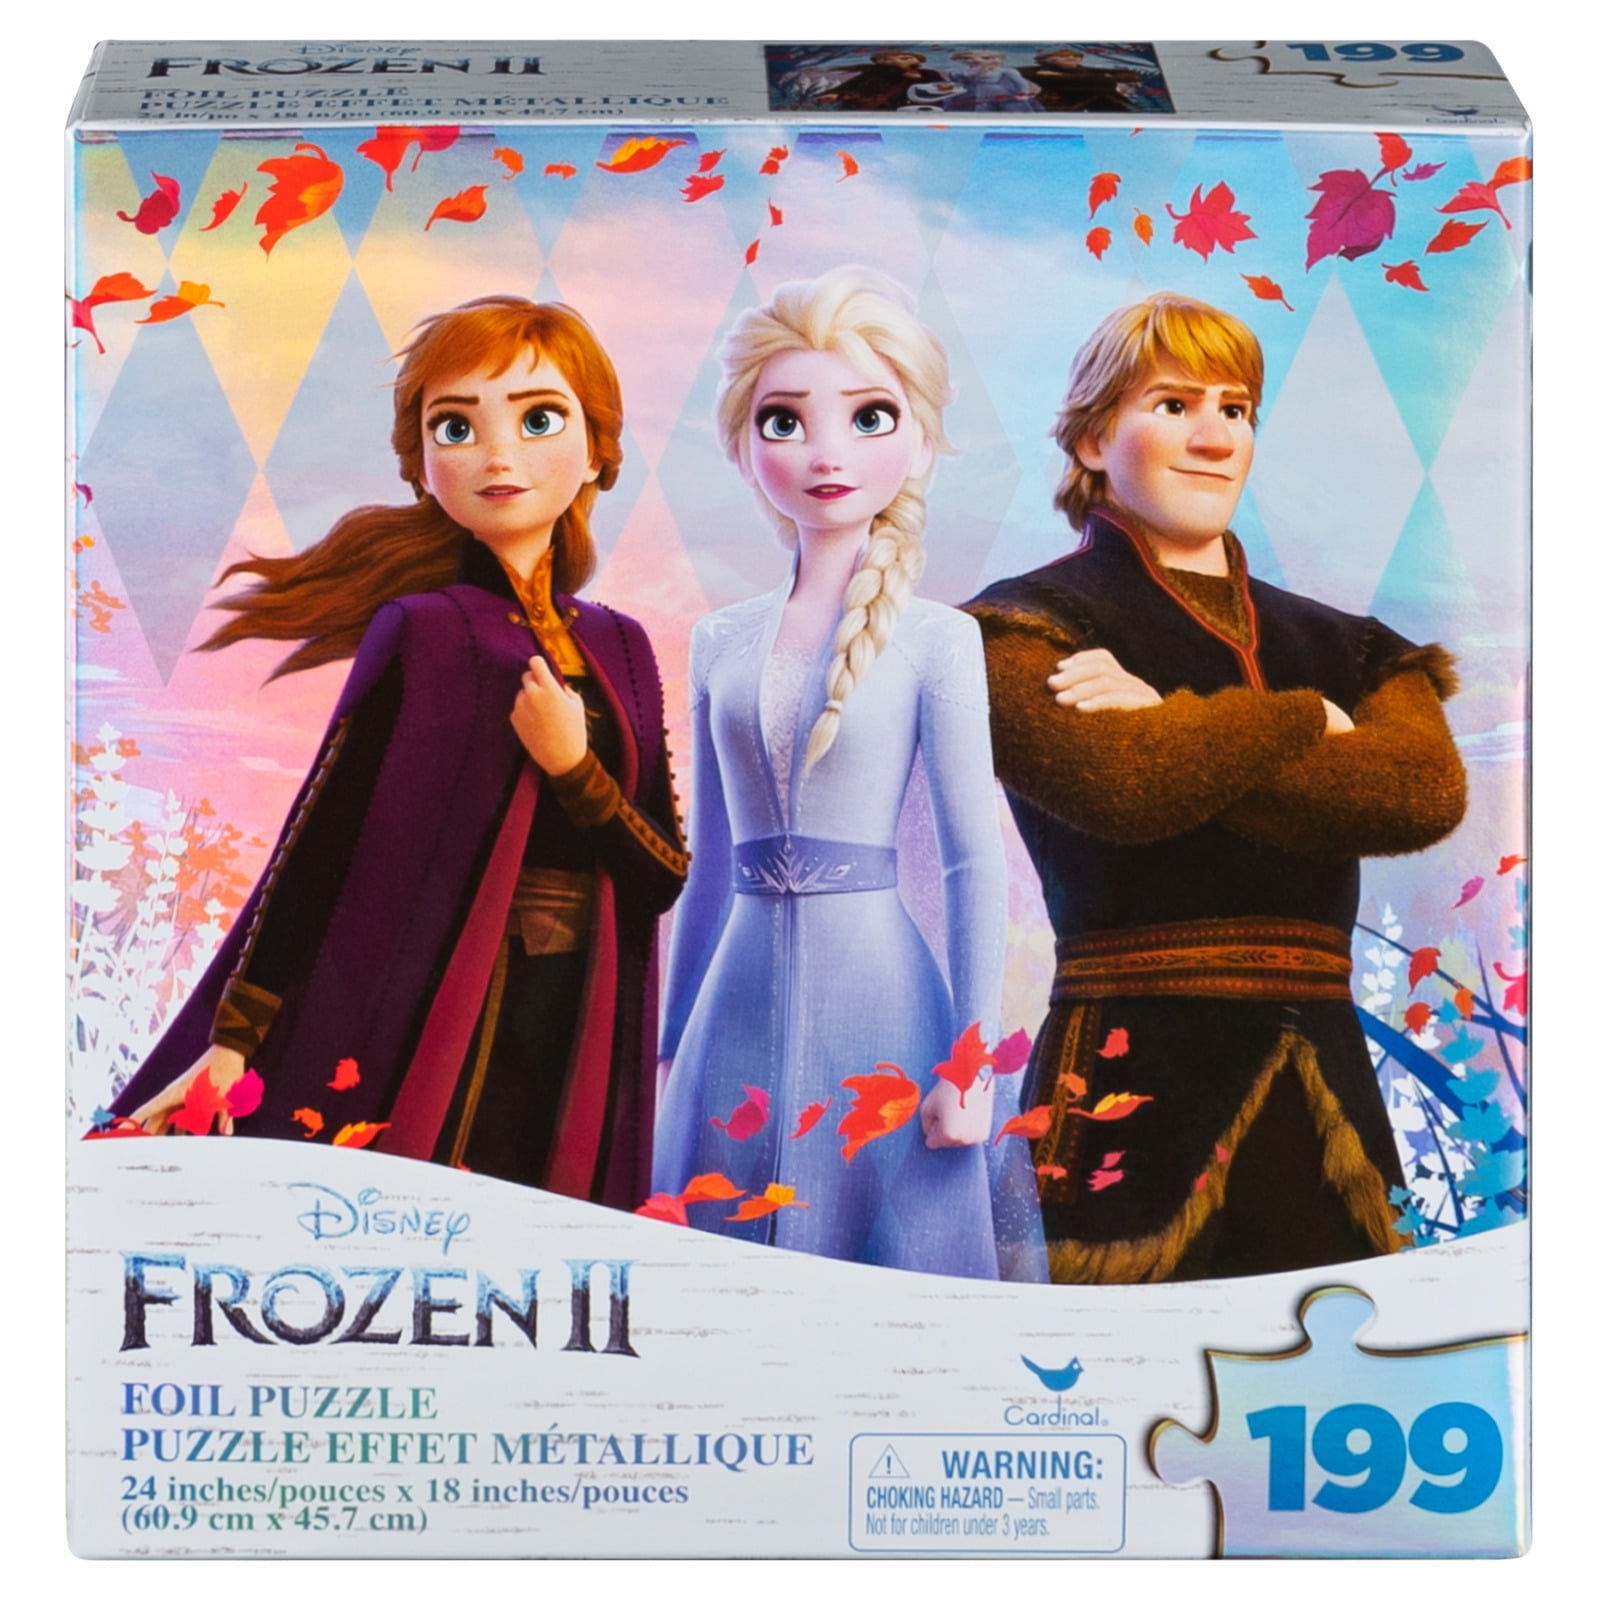 Disney "Frozen" Glow Jigsaw Puzzles 500 Pieces Toy & Puzzle 